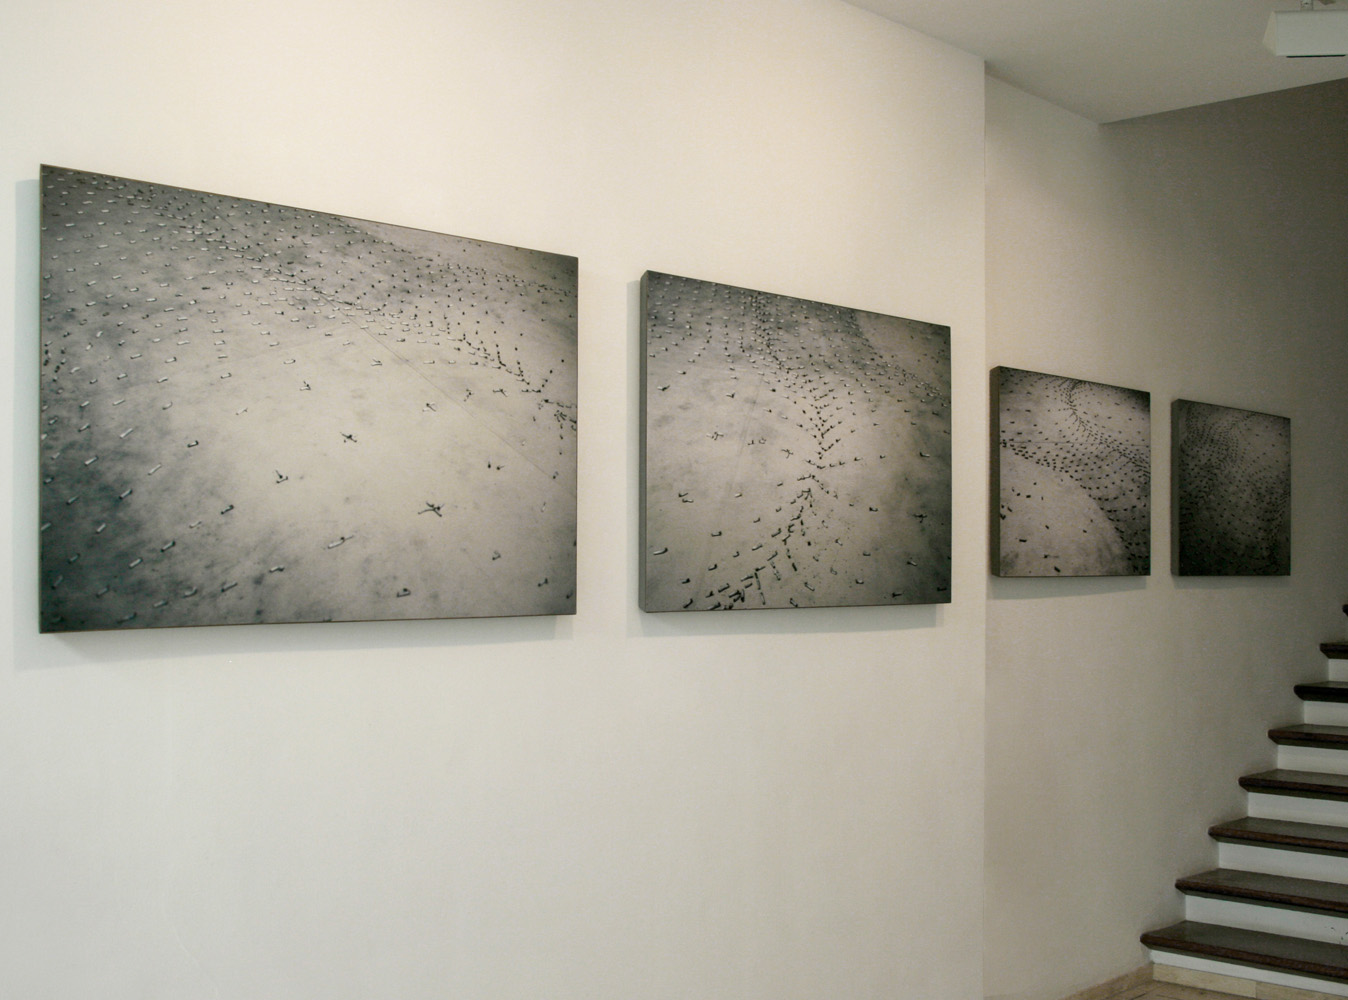 Exhibition view 'Escombrar' in the Galeria Maior of Pollença, 2009